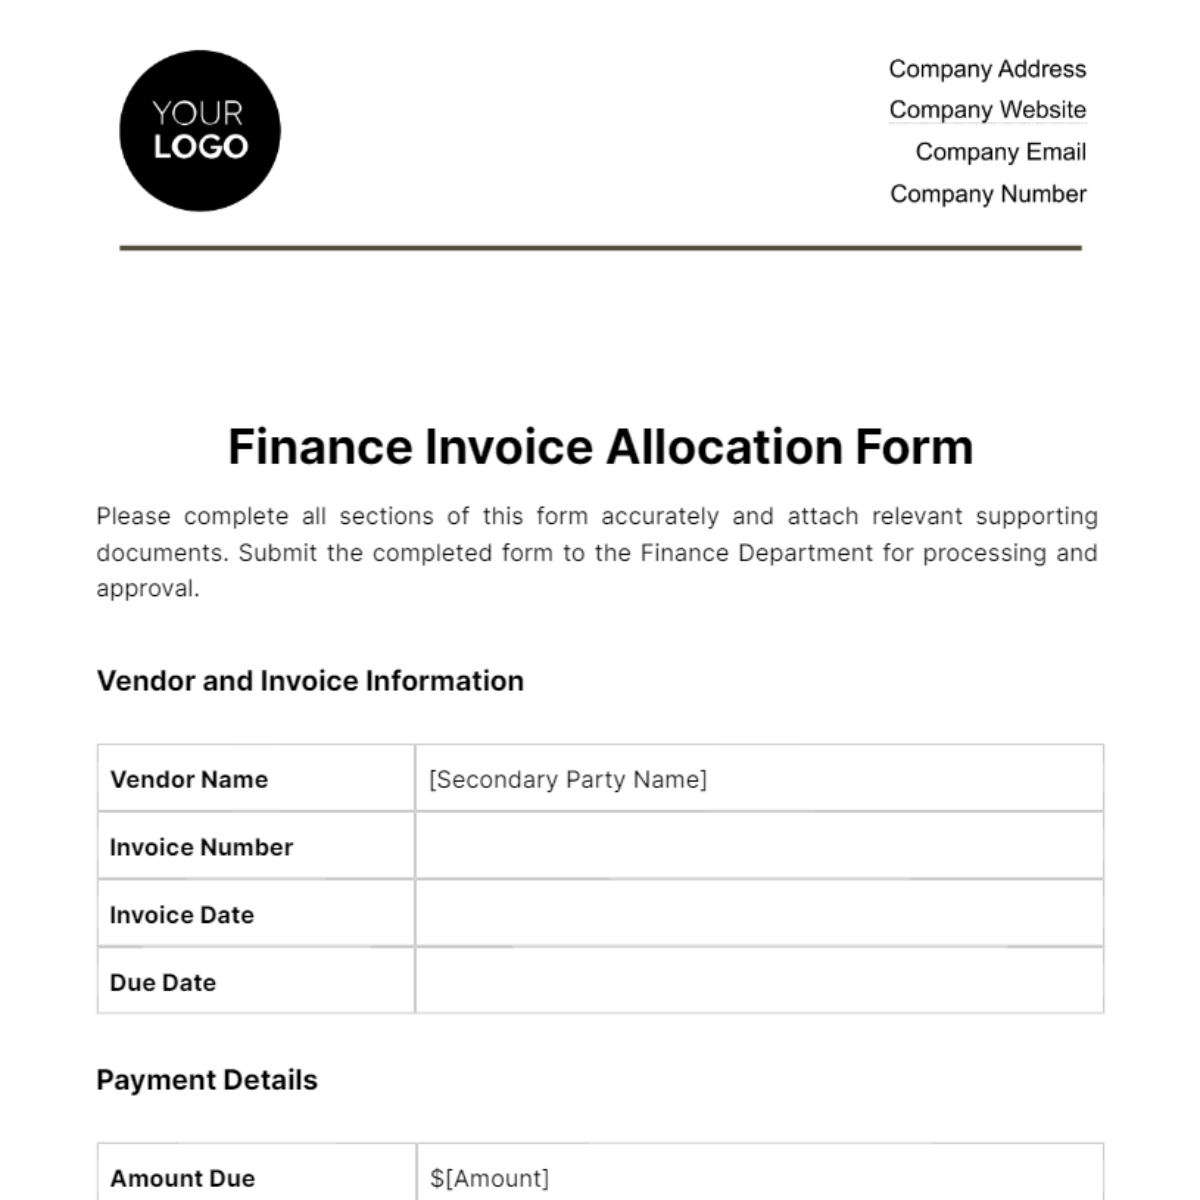 Finance Invoice Allocation Form Template